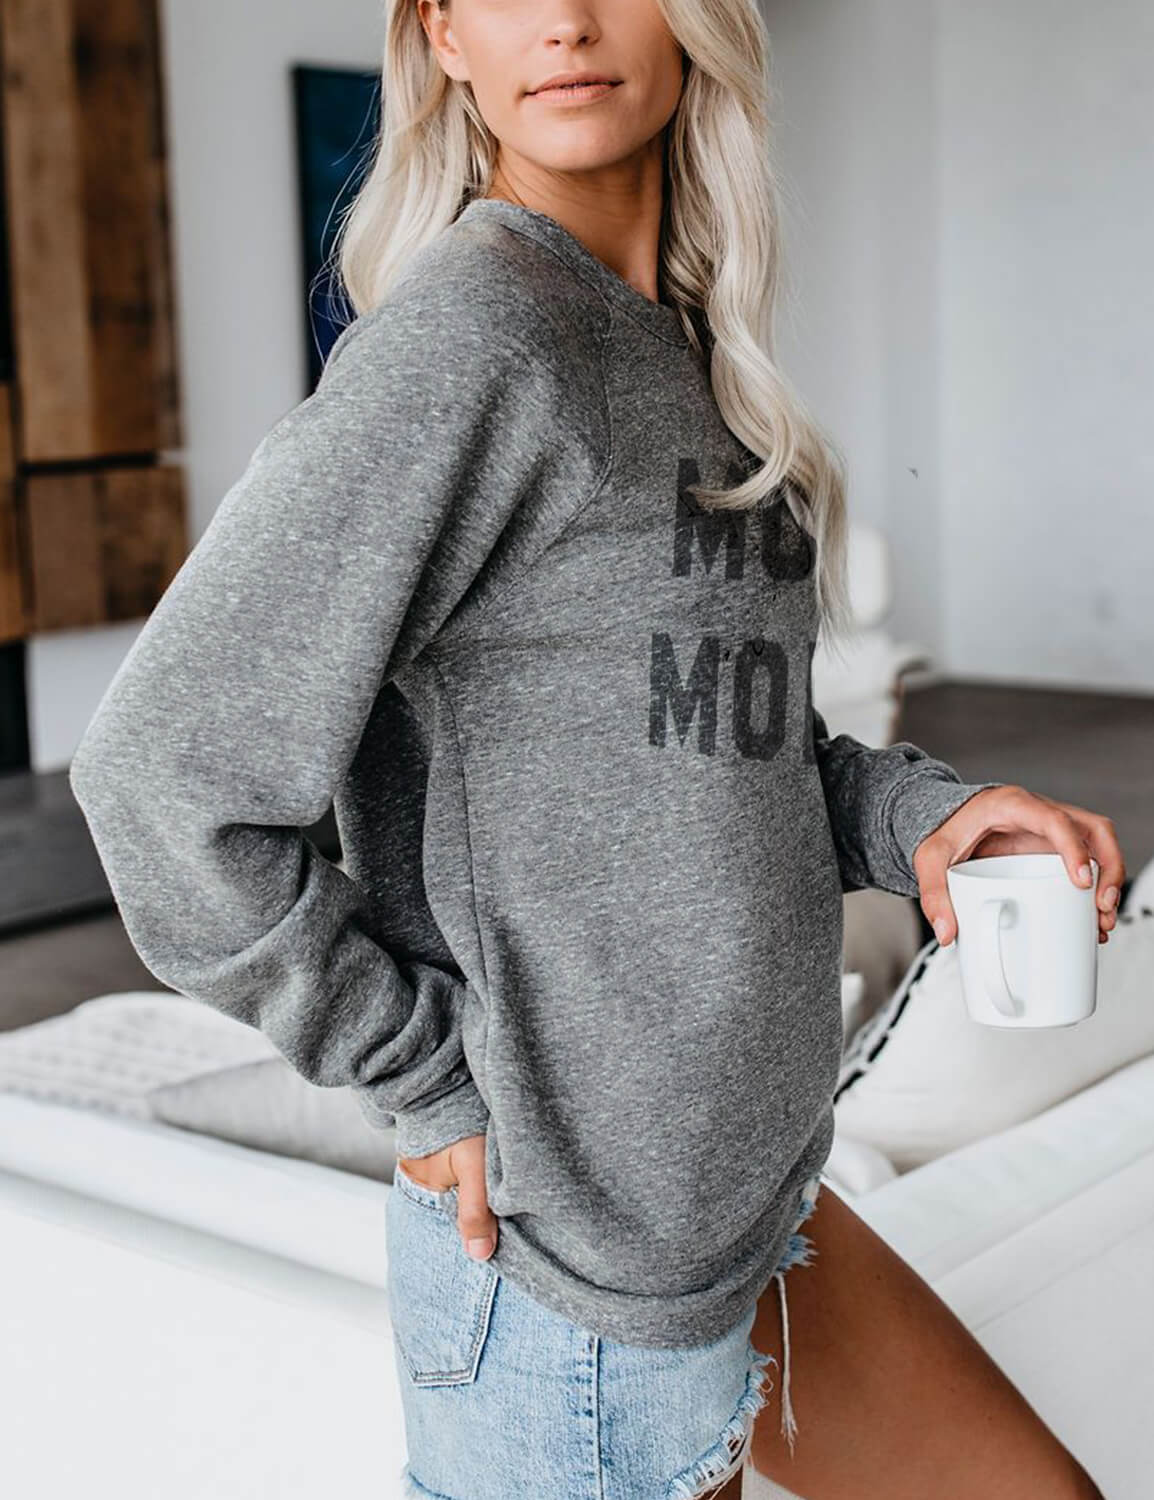 Mom Mode Letter Print Casual Sweatshirt